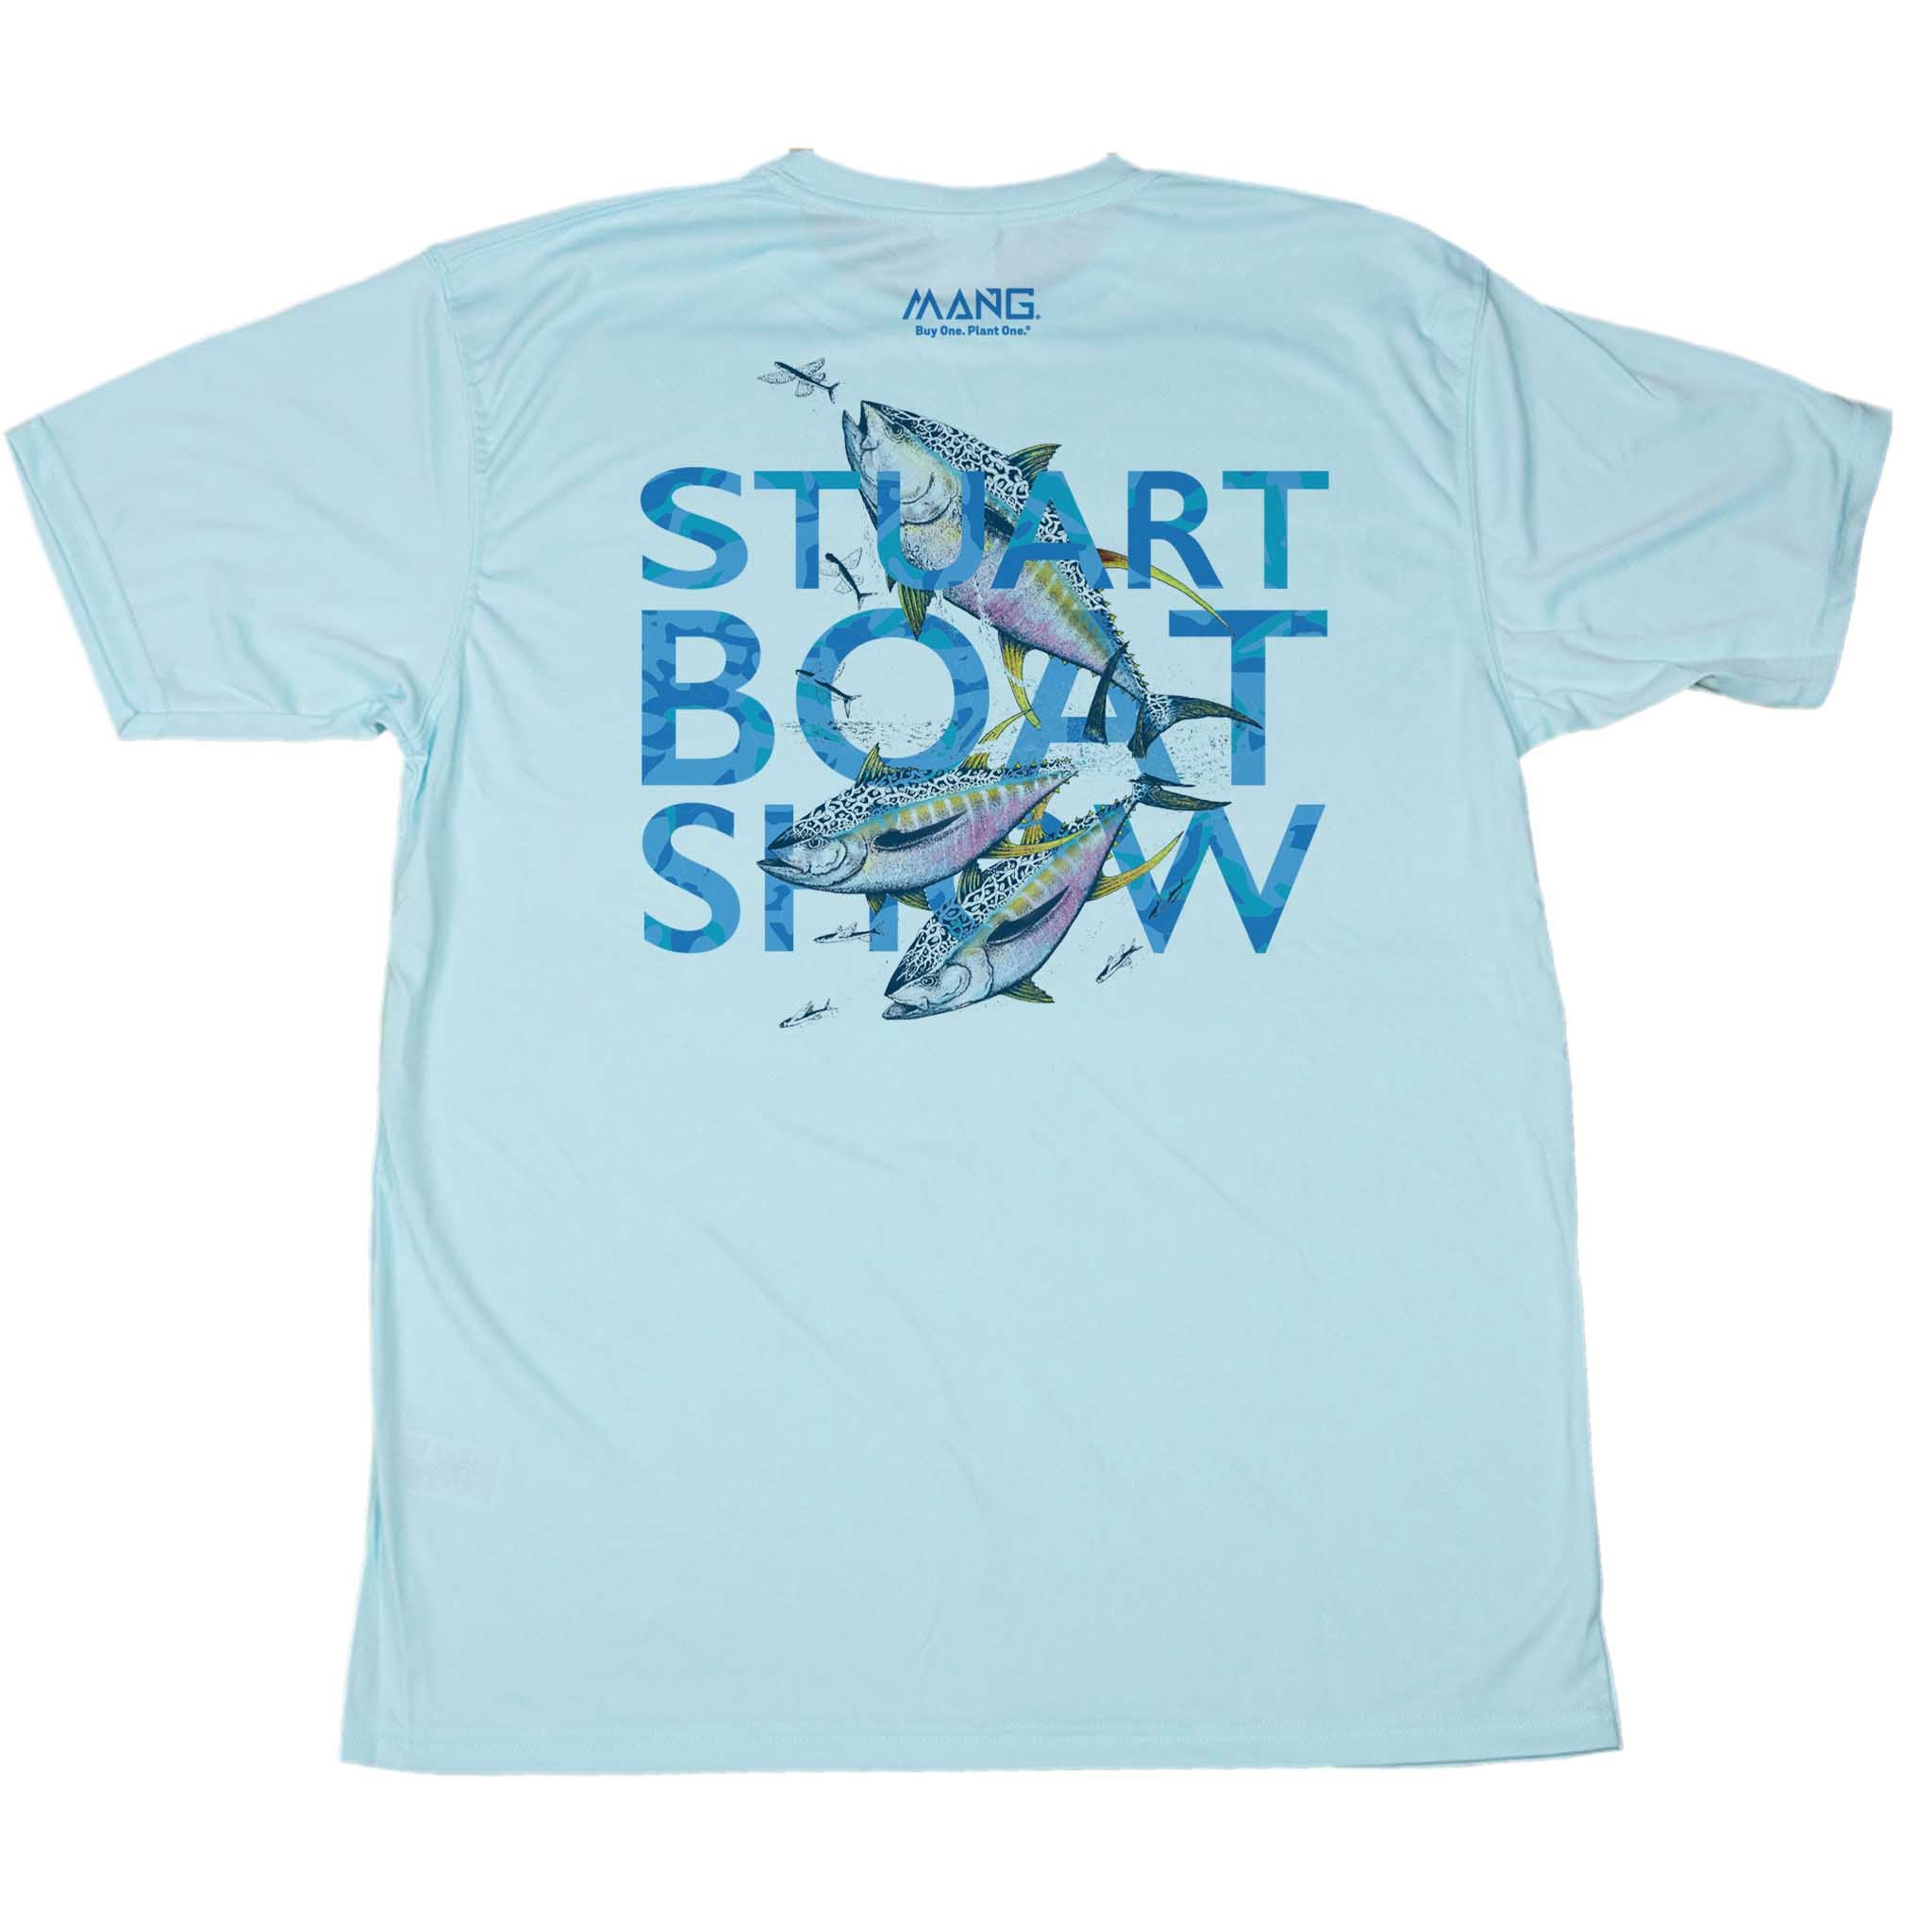 MANG Stuart Boat Show 50th Anniversary - SS - XS-Arctic Blue